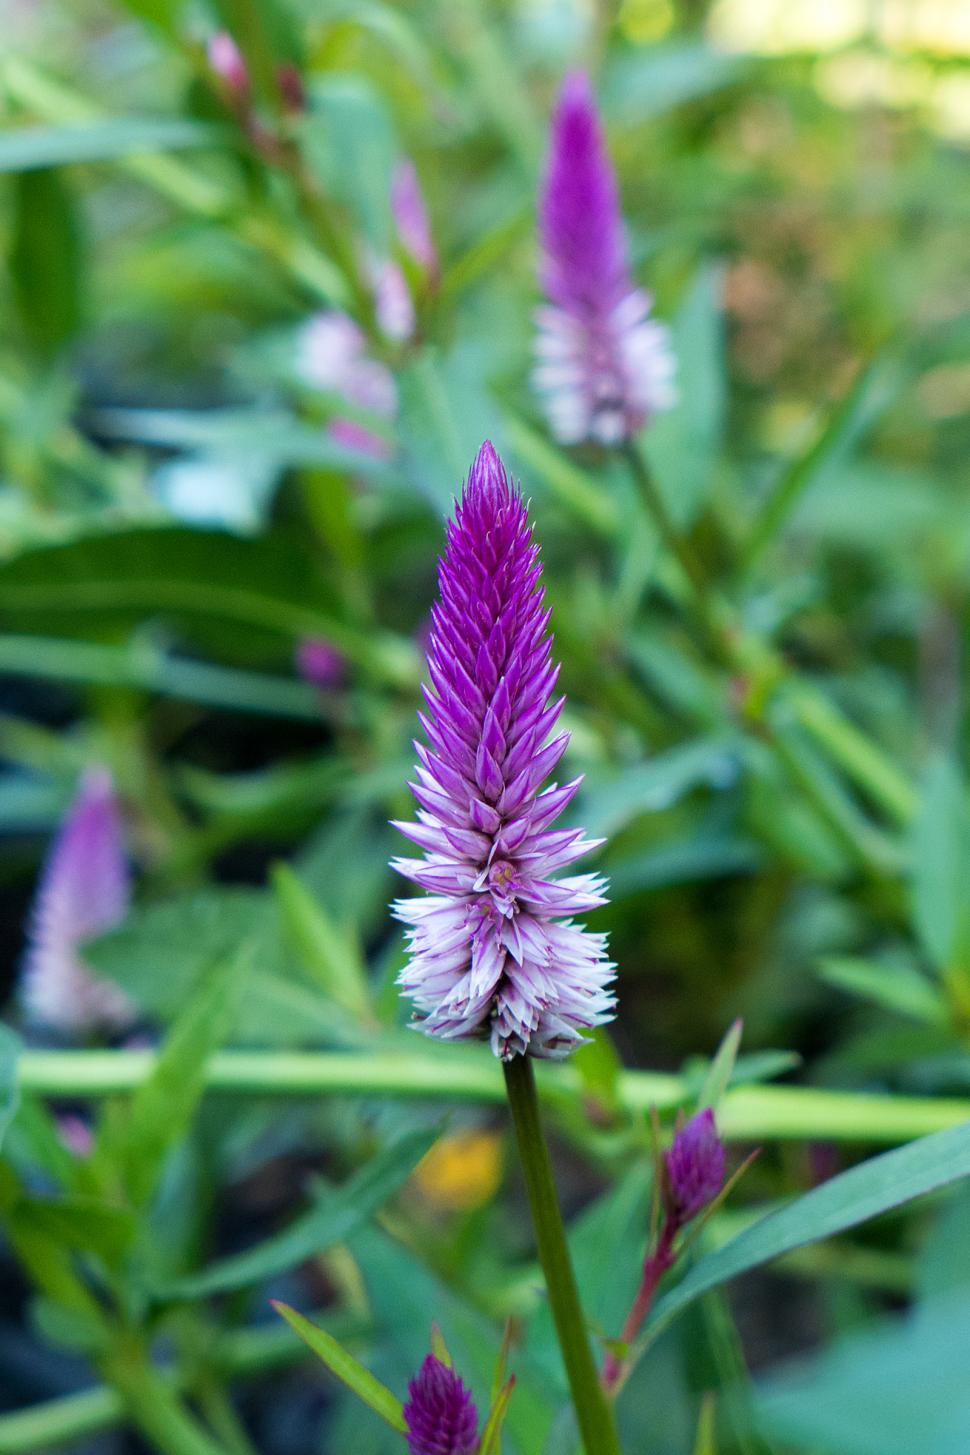 Free Image of Celosia Argentea Flowers 